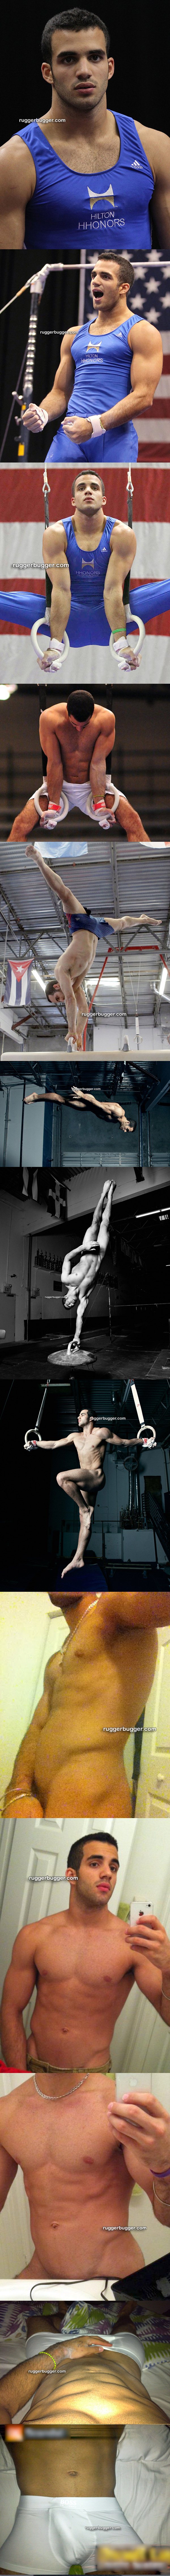 handsome Cuban-American gymnast Danell Leyva Gets Naked at Ruggerbugger 02